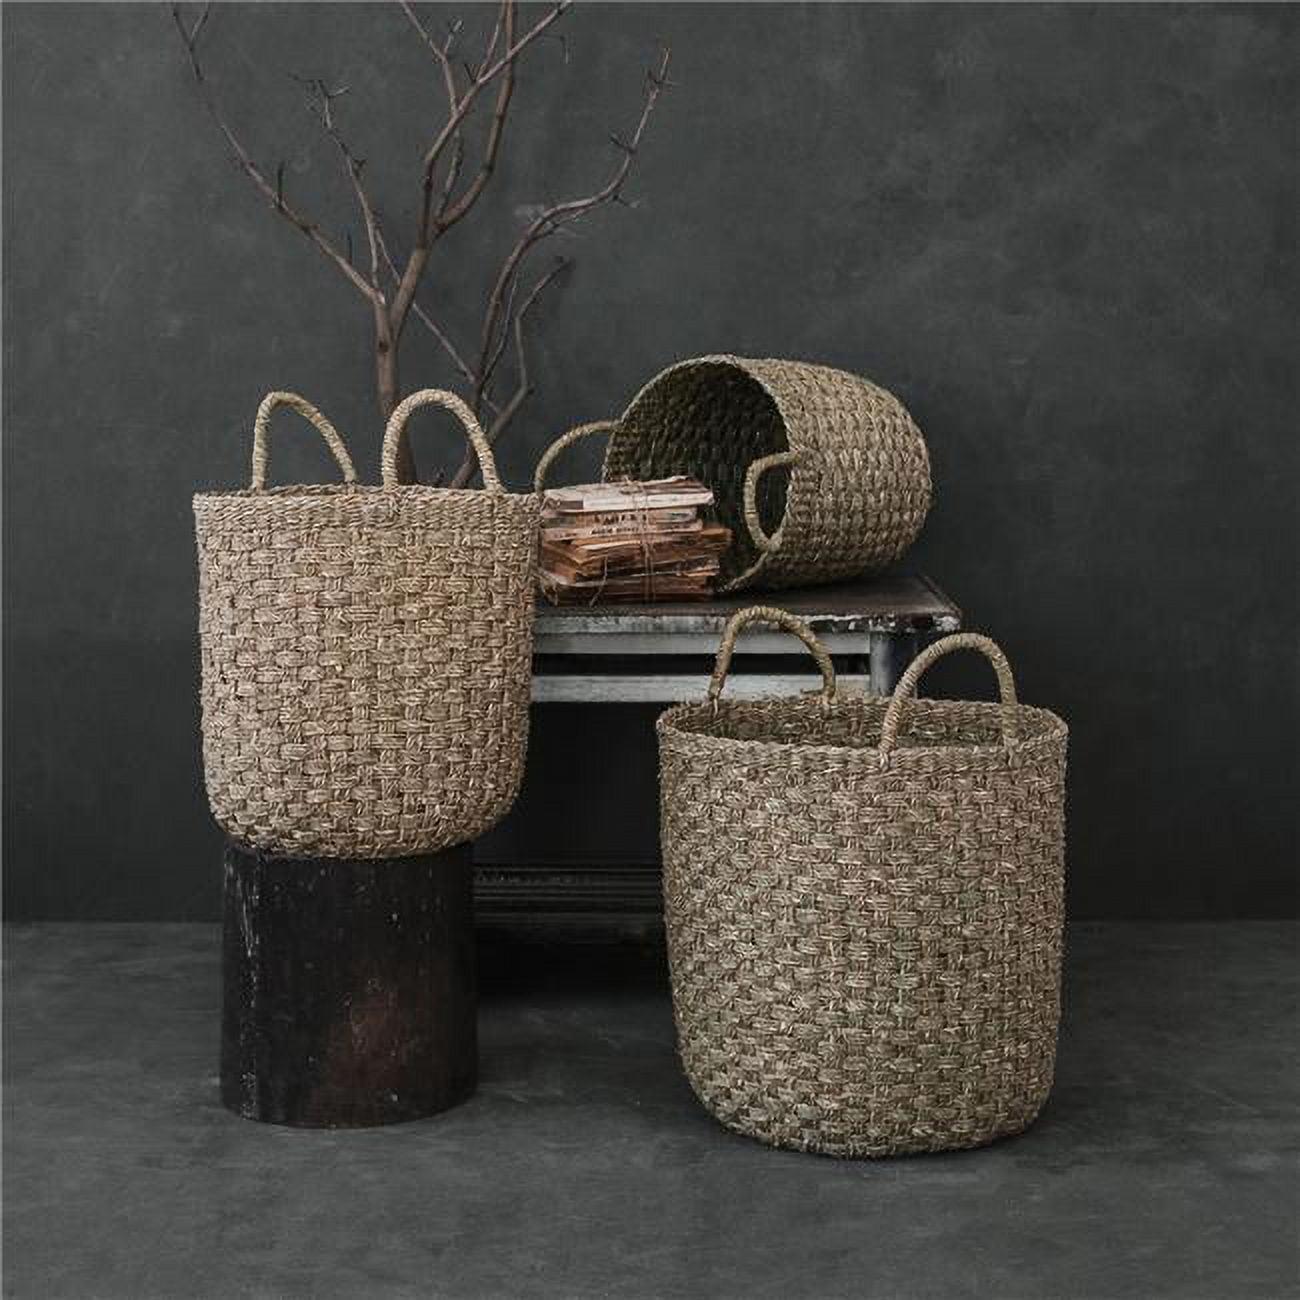 Handwoven Cylindrical Seagrass Storage Basket with Handles - Medium